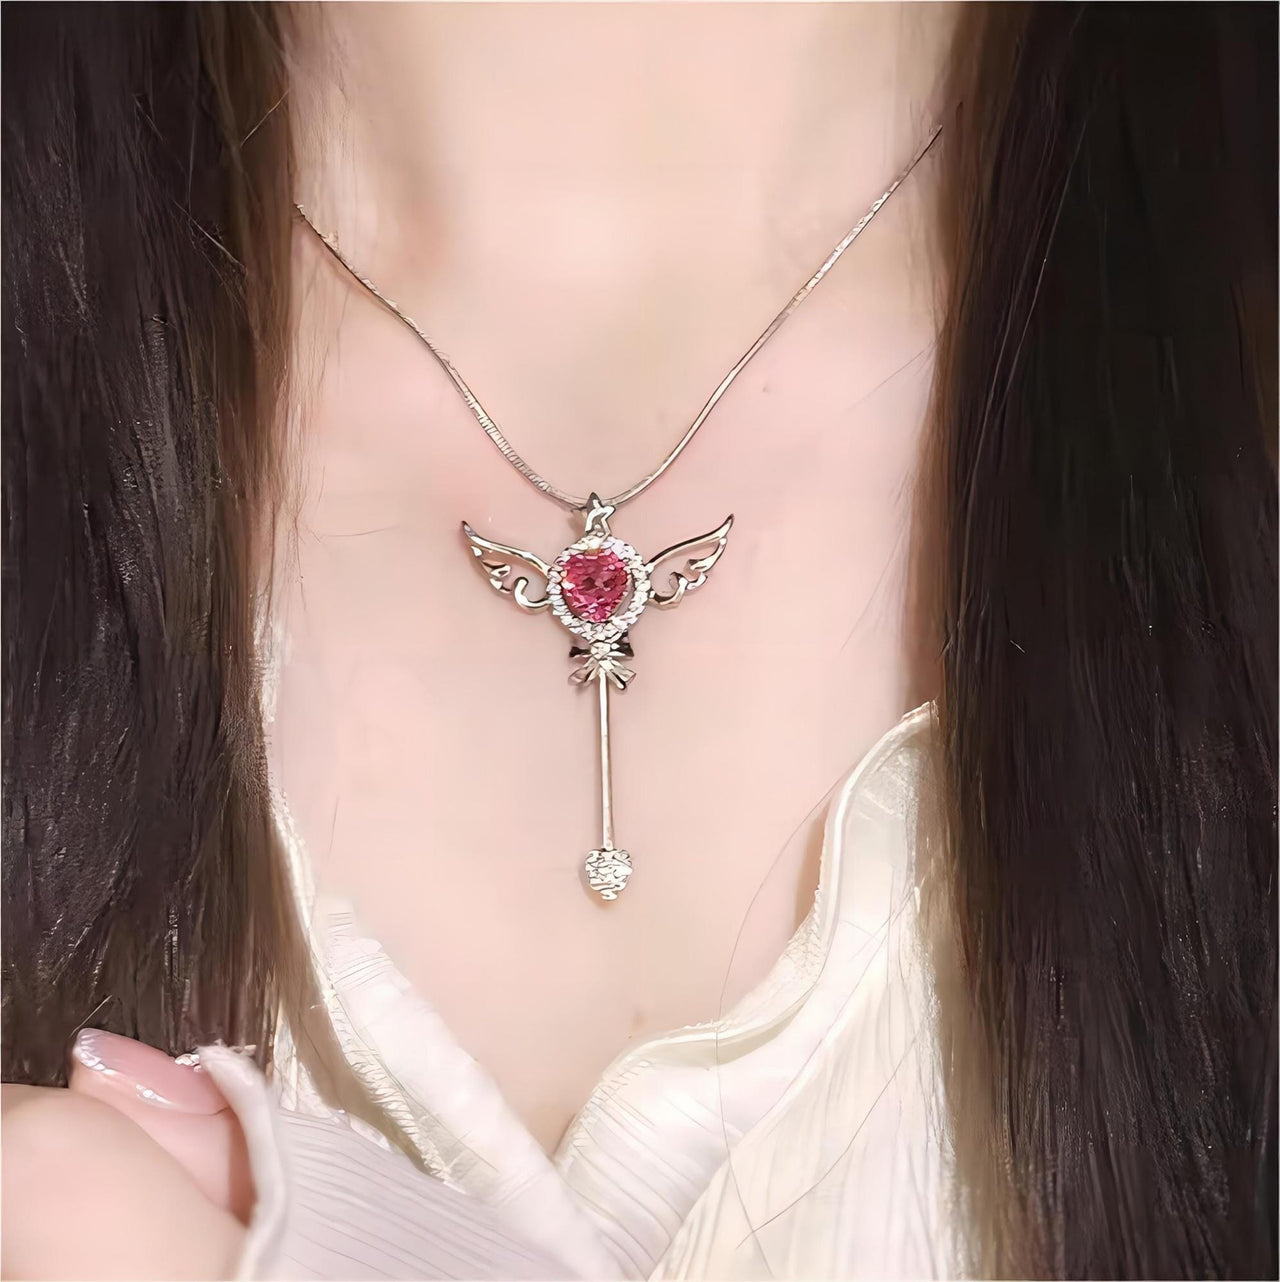 Cat Necklace-Swarovski Crystal Heart